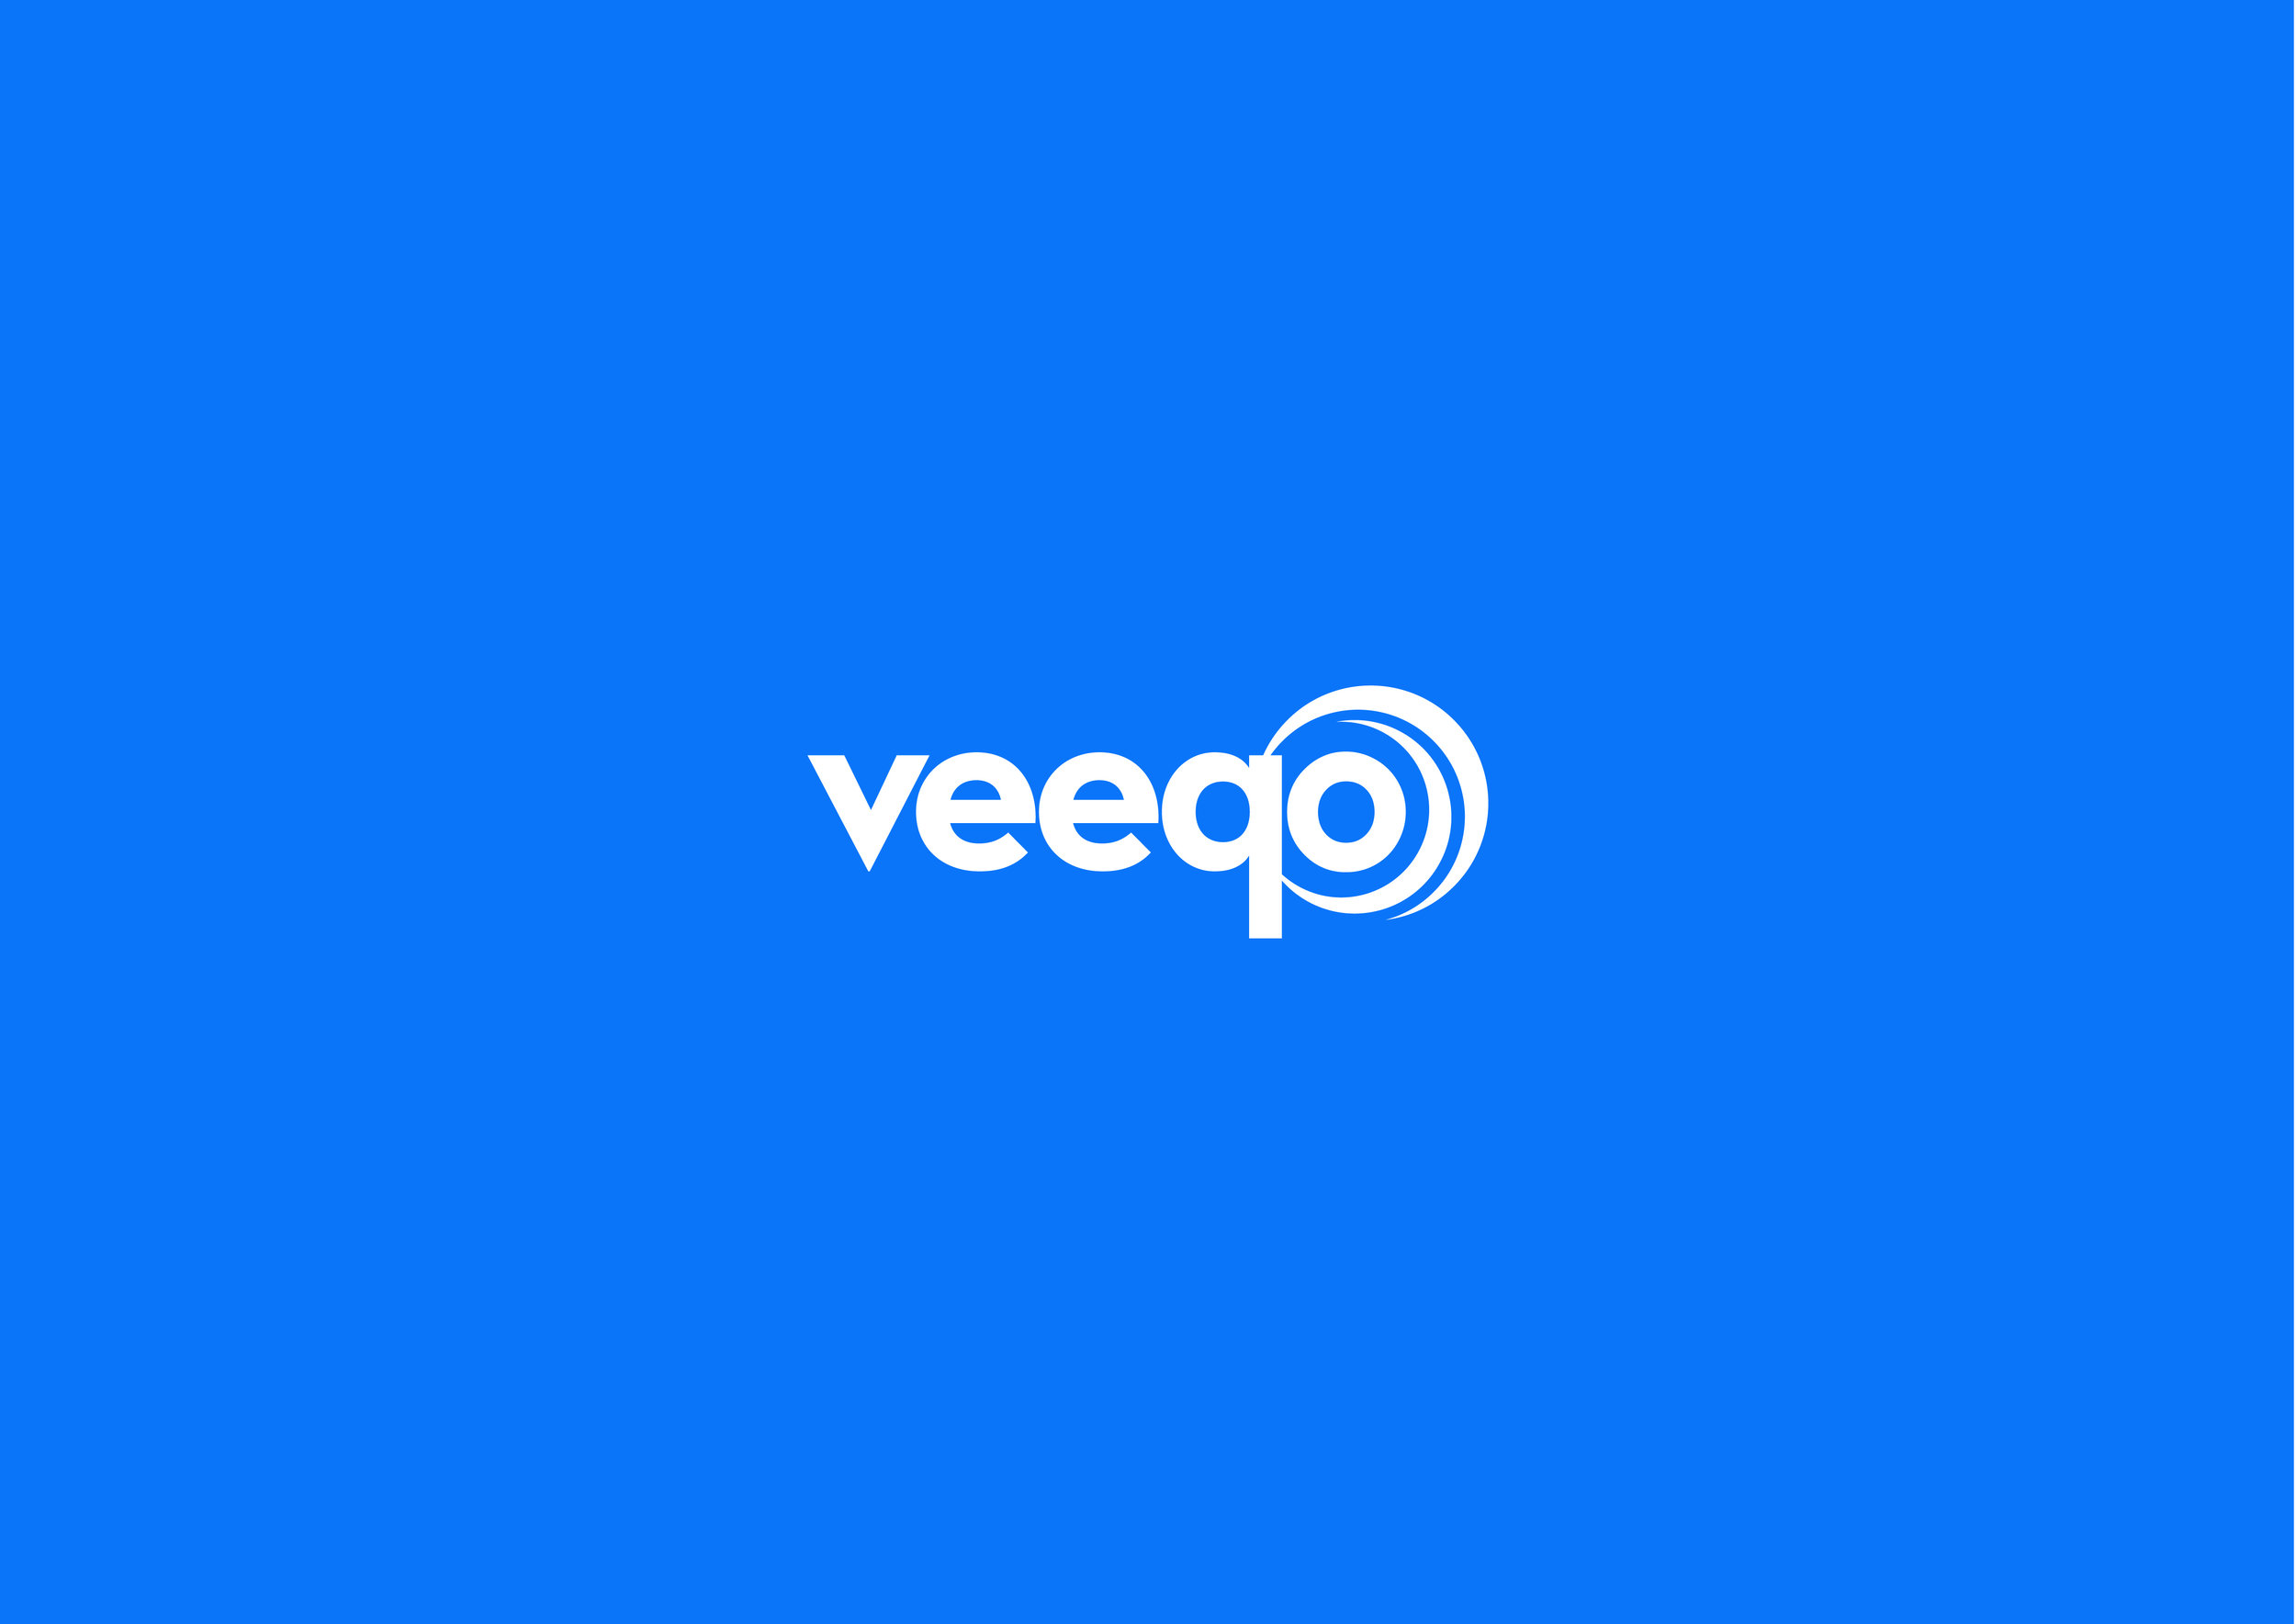 Freelance-graphic-designer-Veeqo company logo in blue background